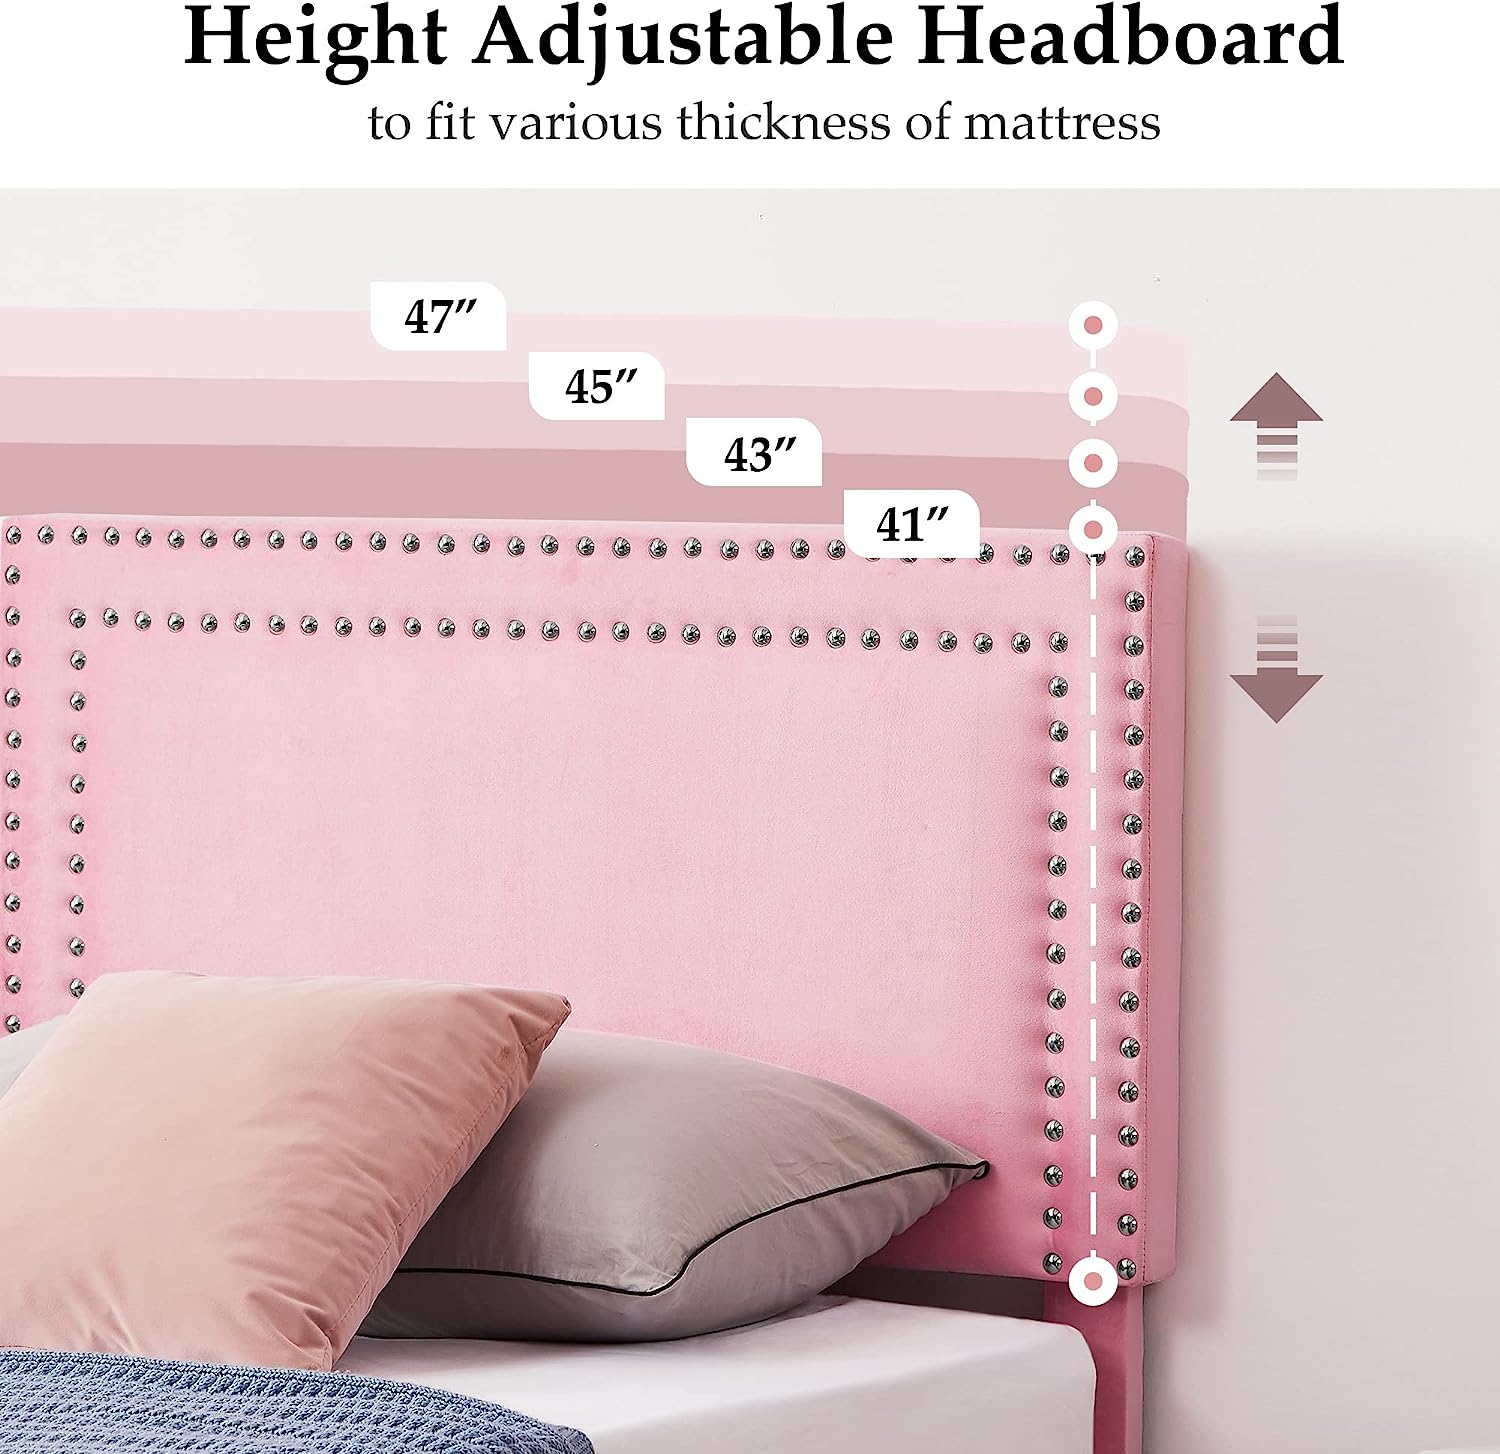 Vecelo Modern Platform Bed Frame/Mattress Foundation with Height Adjustable Upholstered Headboard